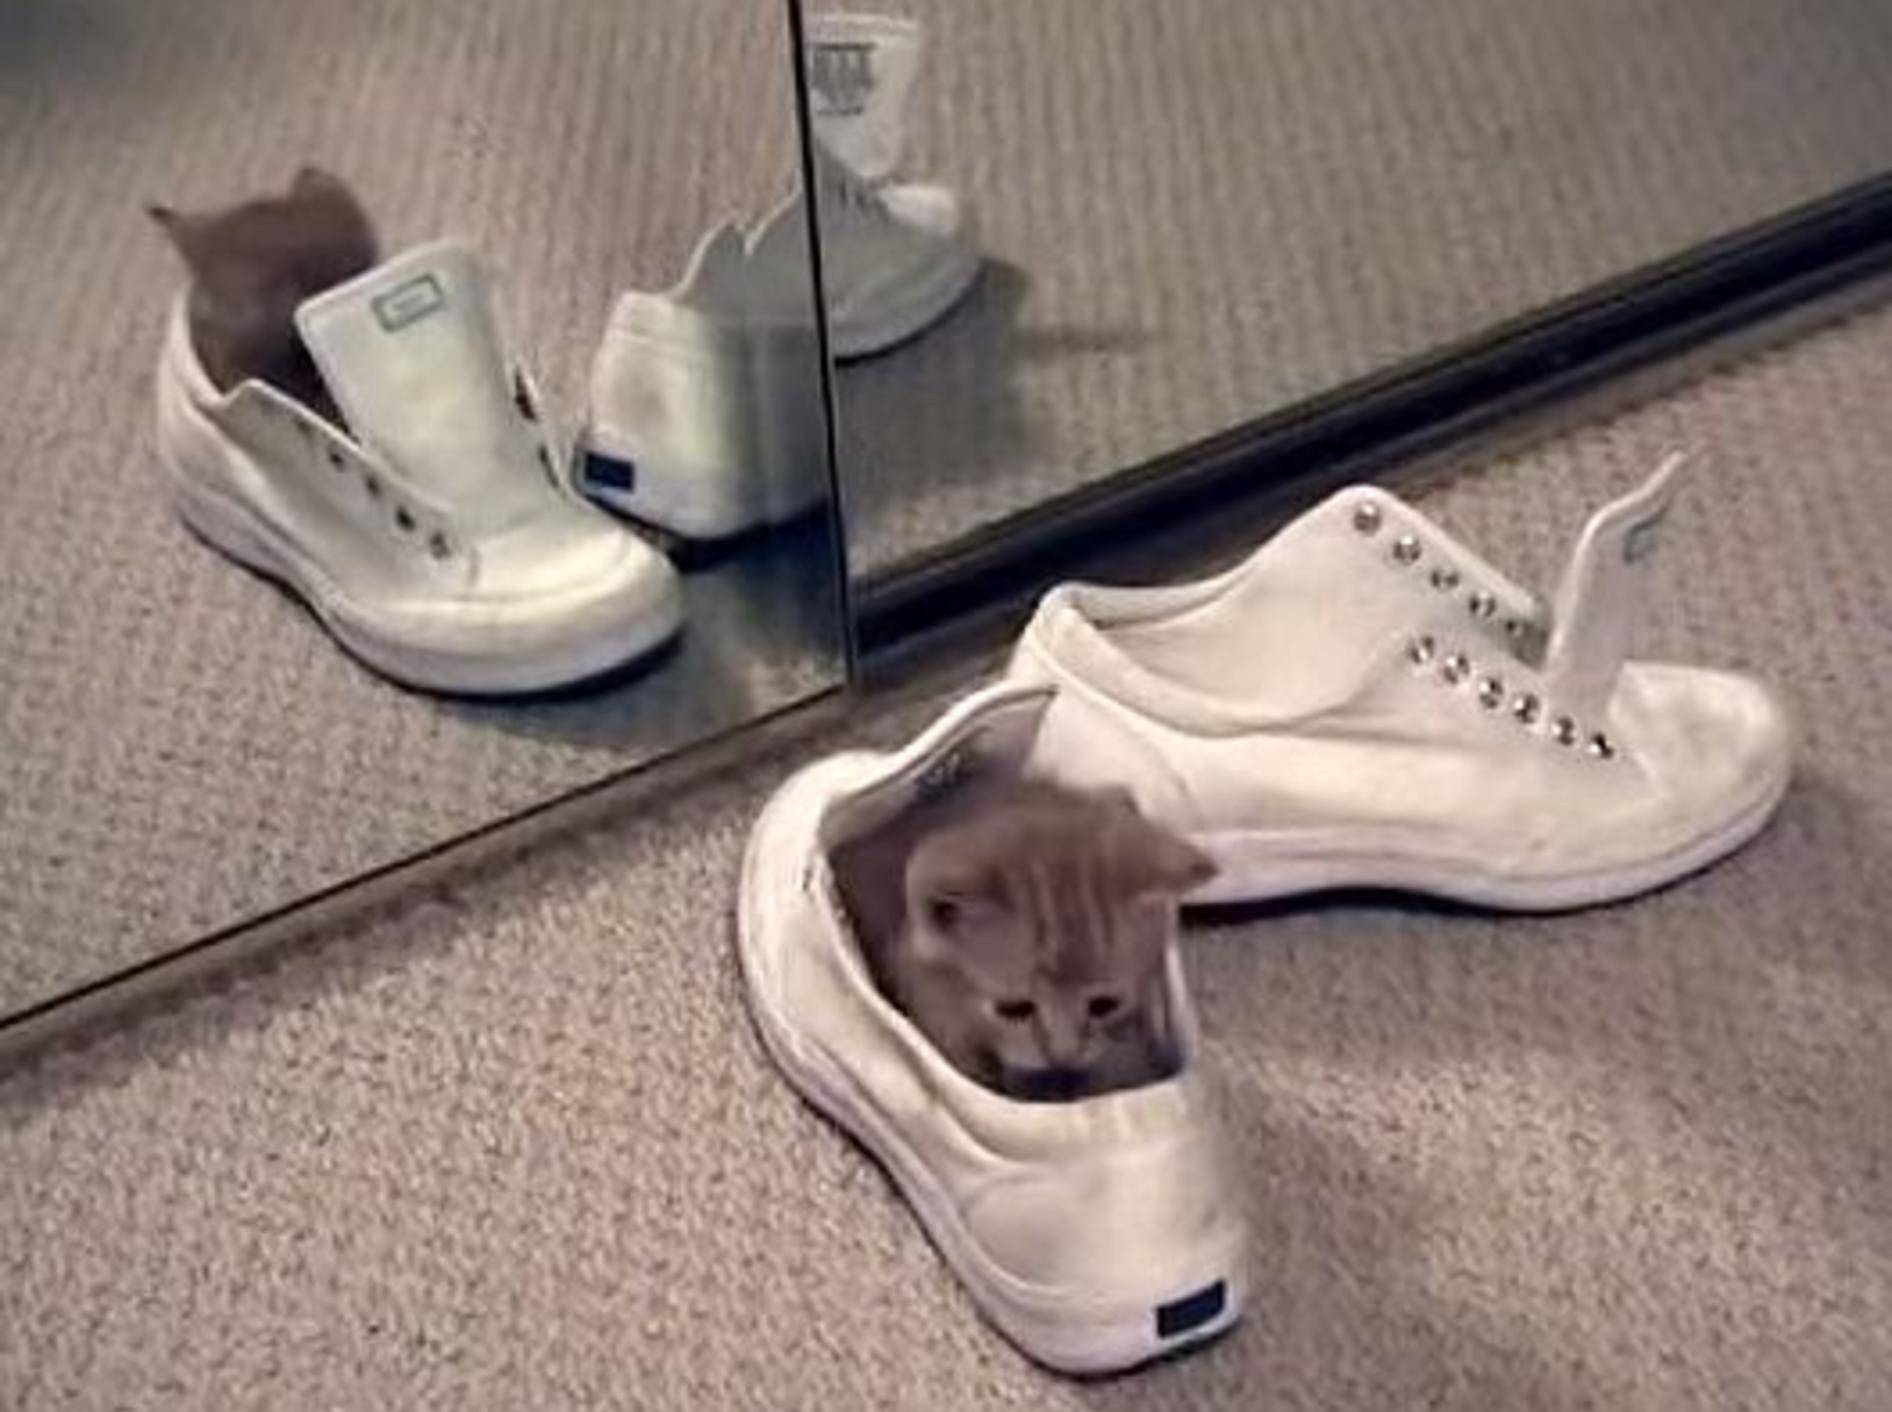 Katze vs. Schuhe vs. Spiegel – Bild: Youtube / Cur417